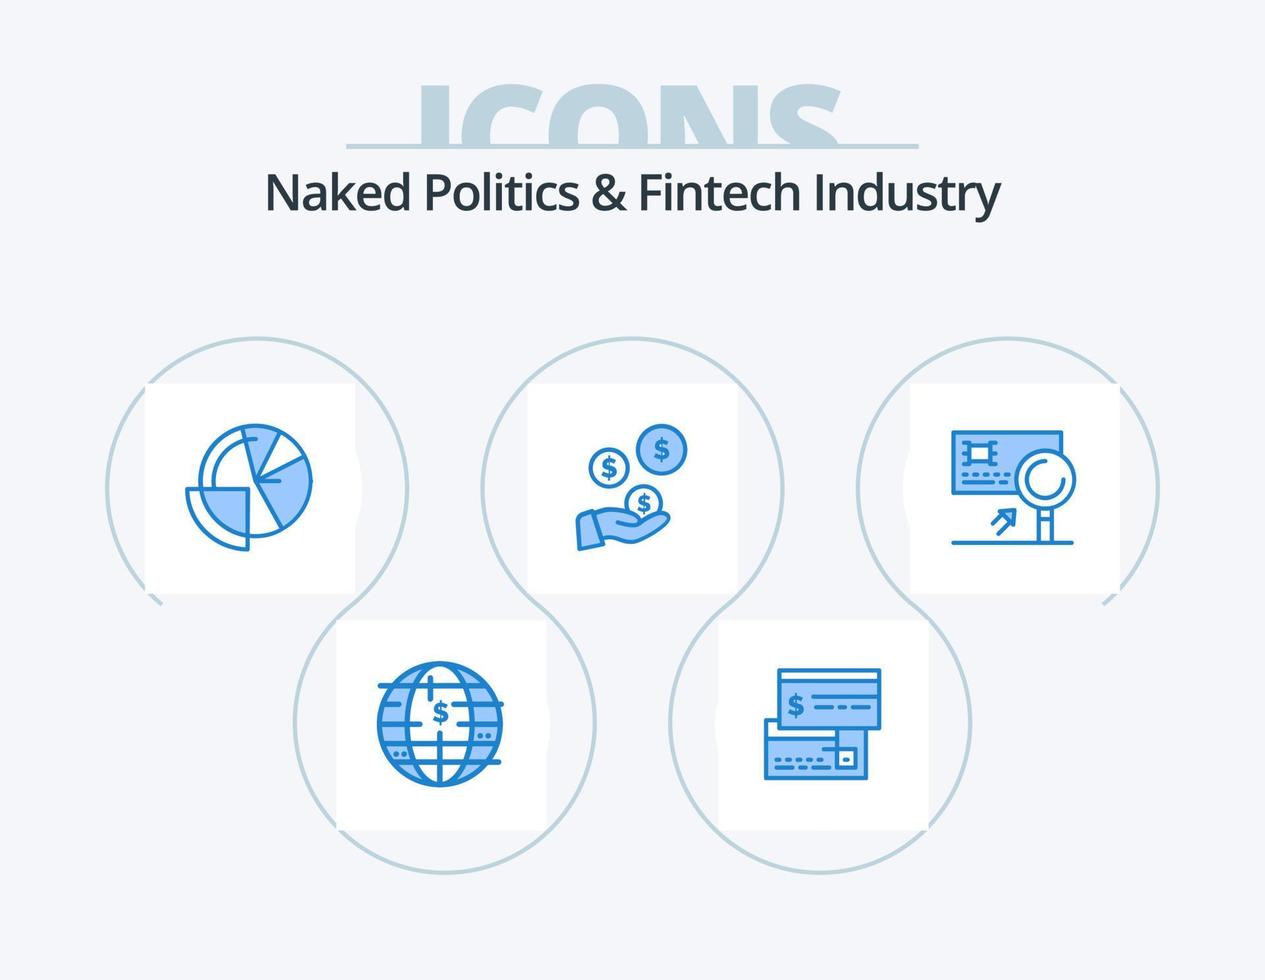 desnudo política y fintech industria azul icono paquete 5 5 icono diseño. dólar. fintech industria. débito. finanzas. analítica vector